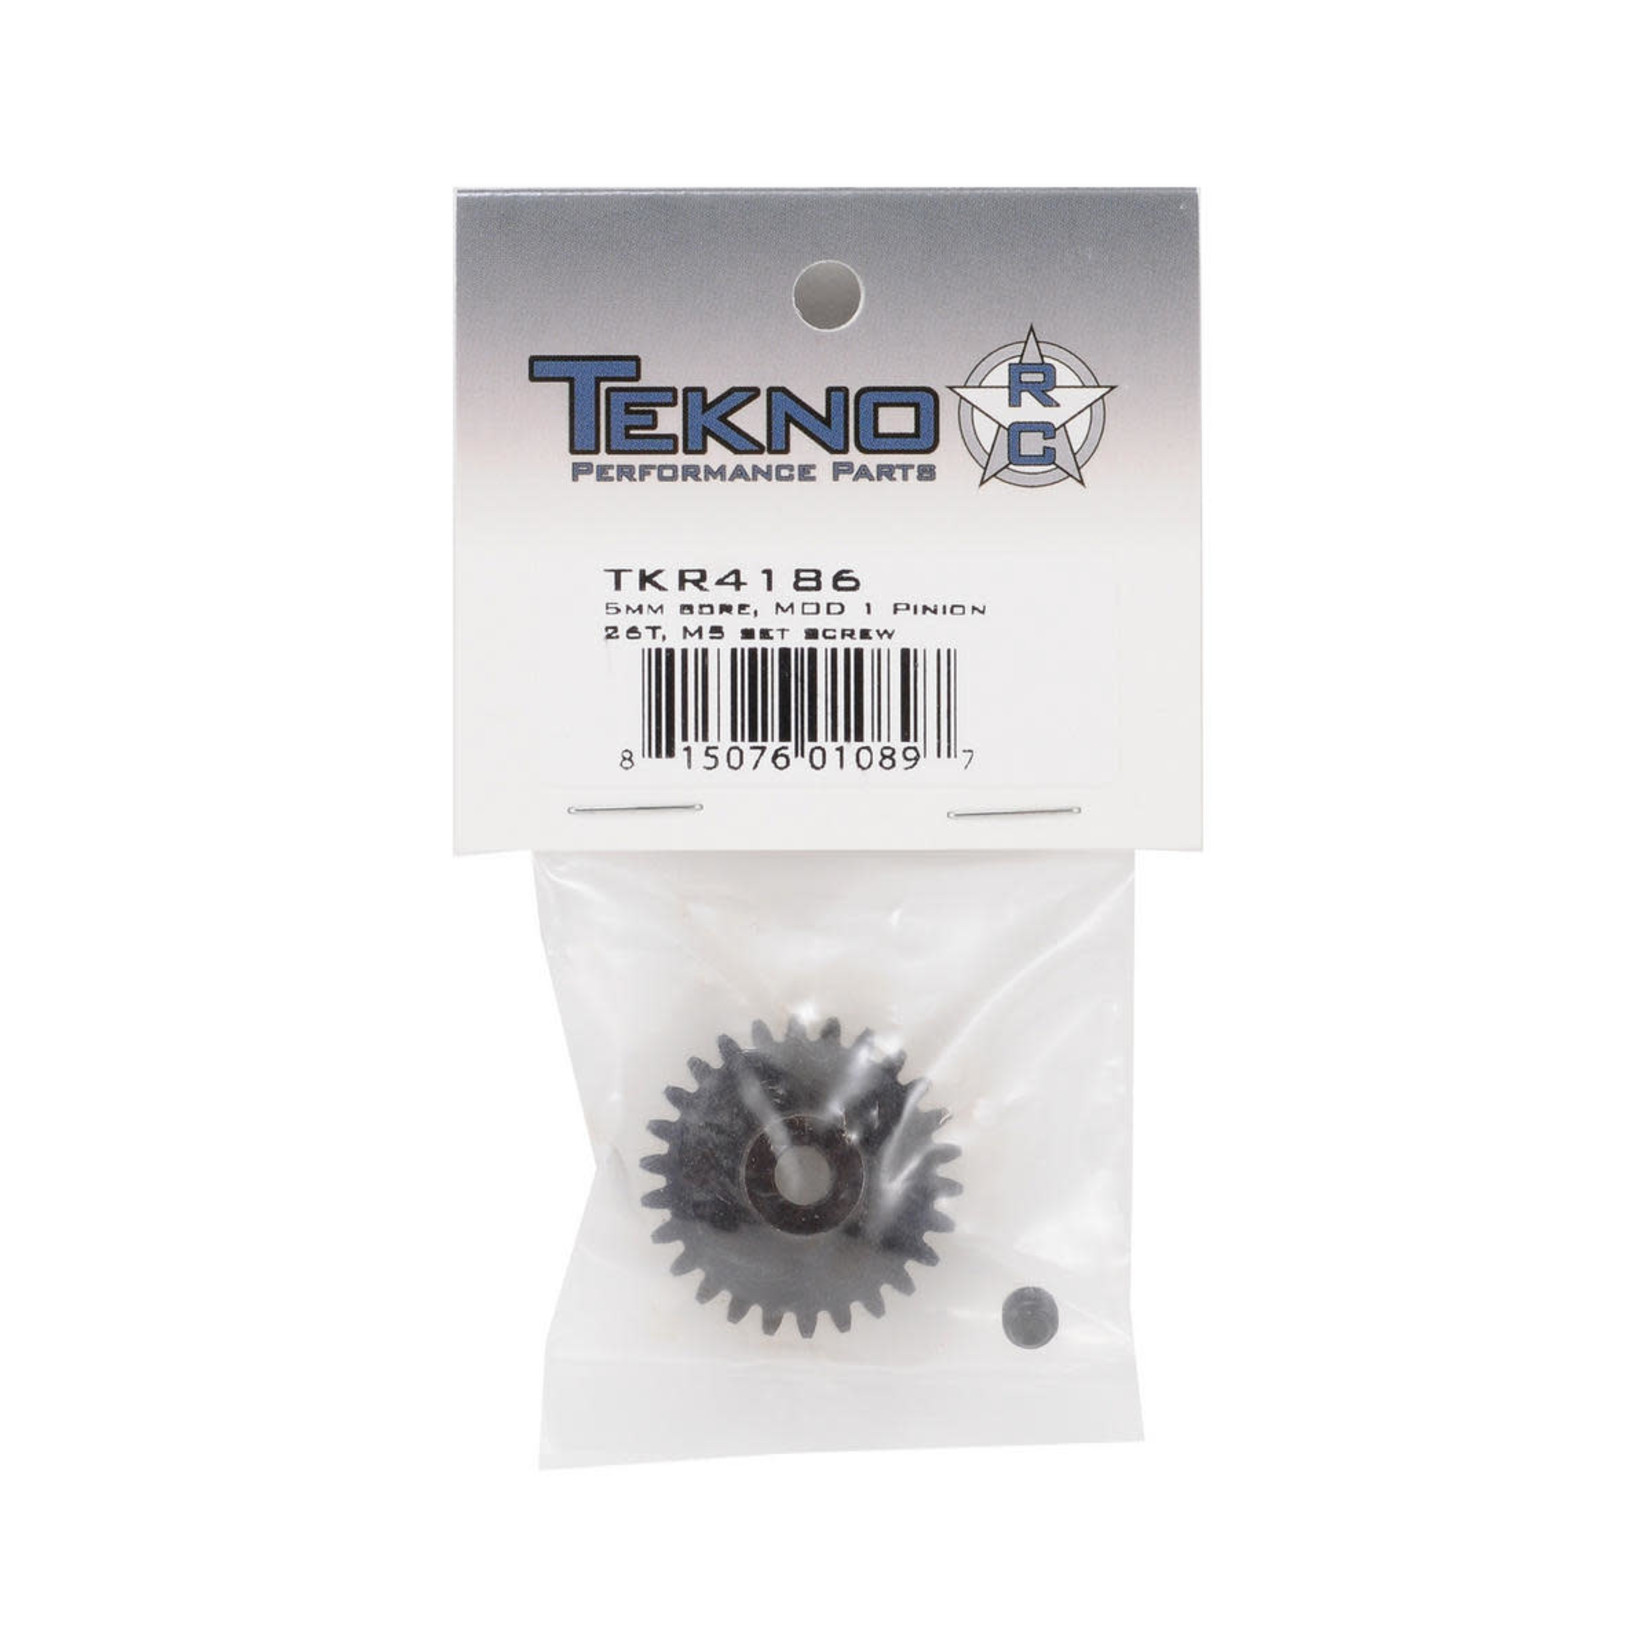 Tekno RC Tekno RC "M5" Hardened Steel Mod1 Pinion Gear w/5mm Bore (26T) #TKR4186